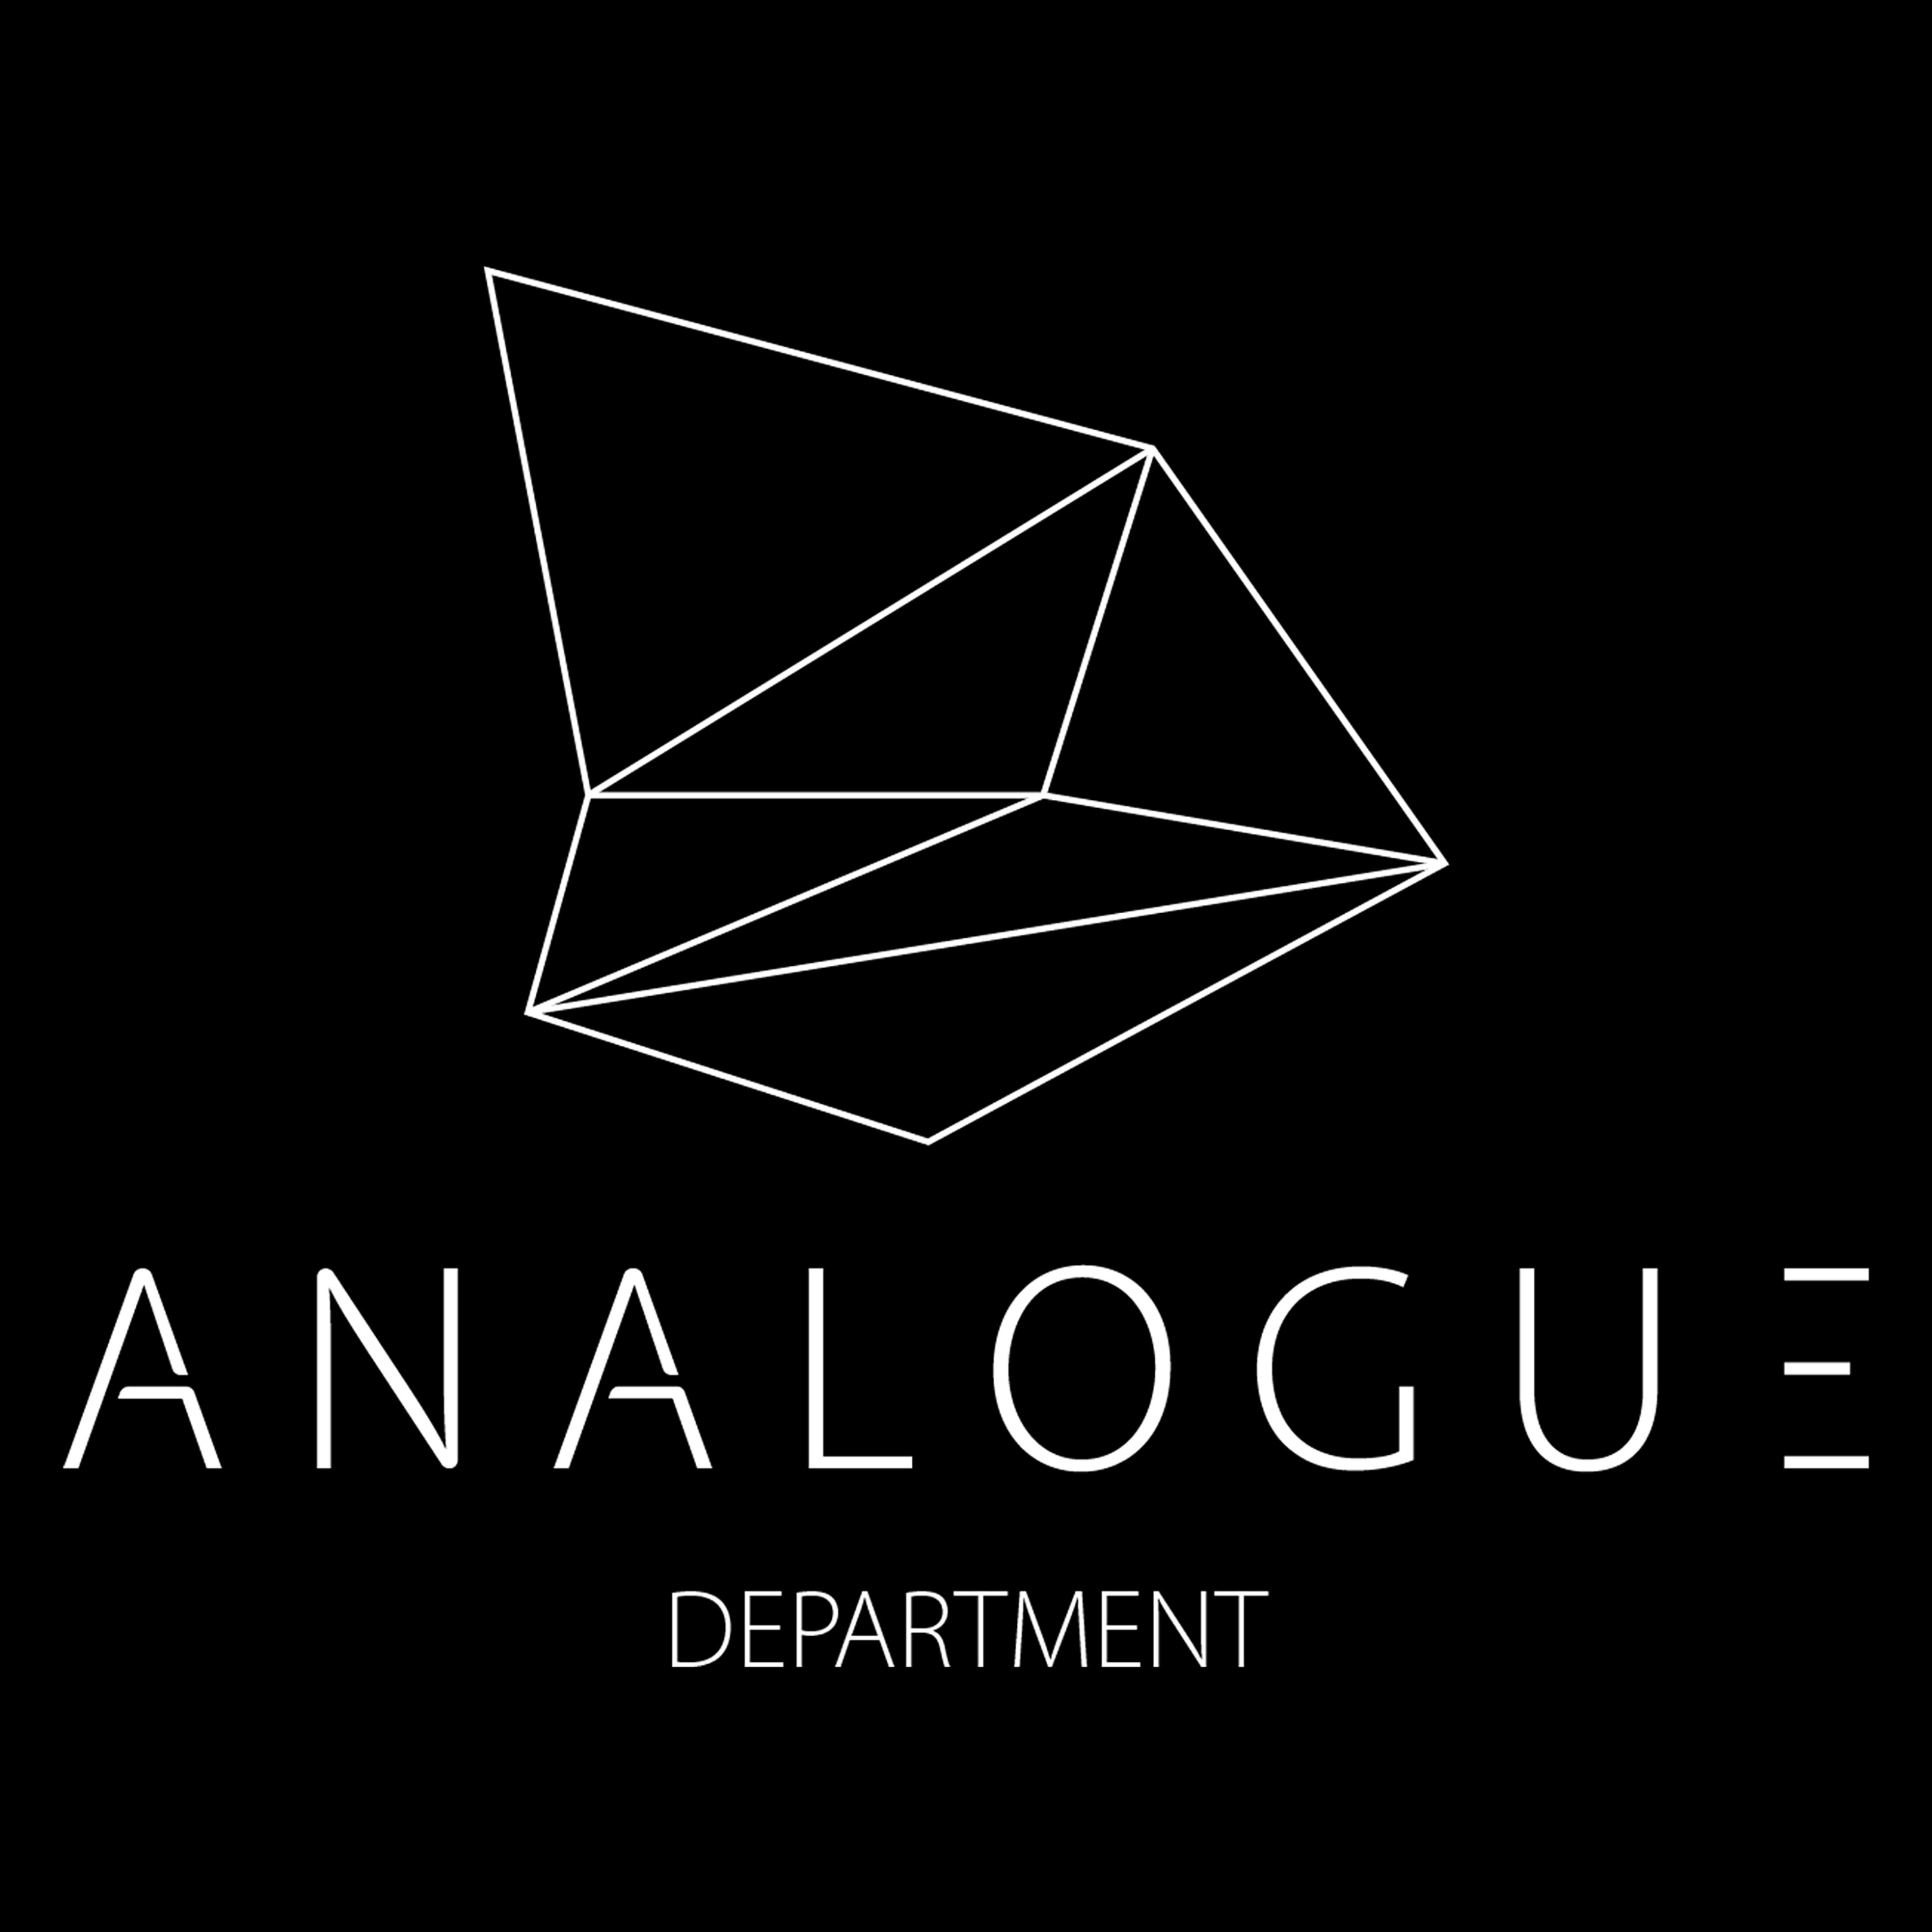 Analogue Department